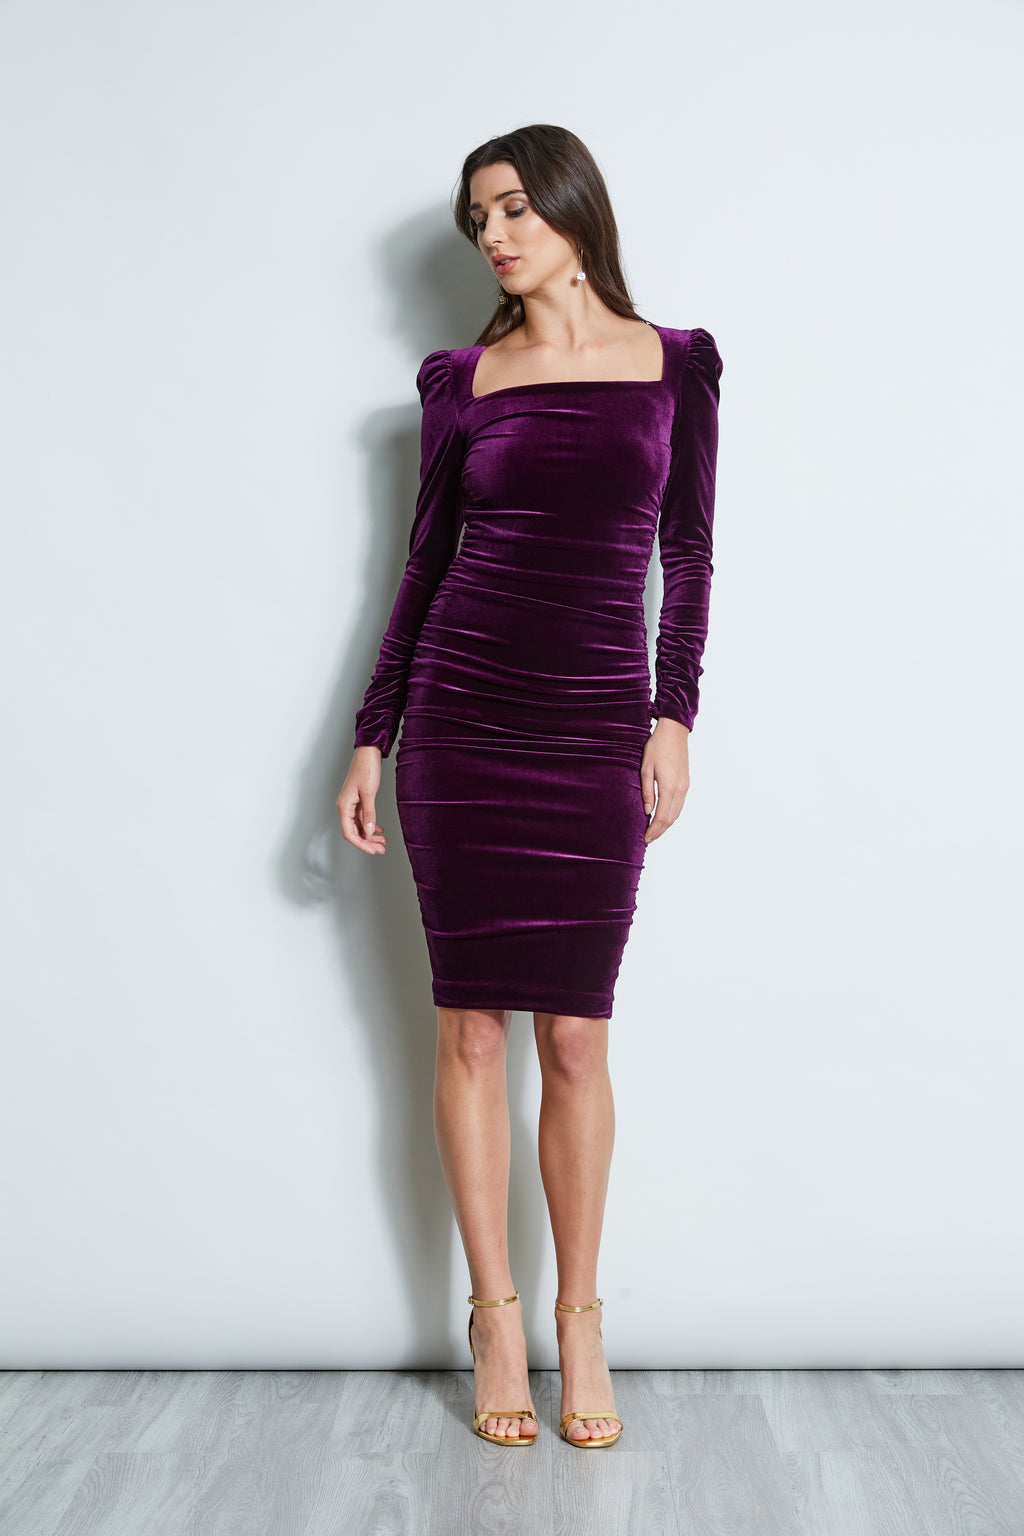 Lilac Satin Jersey Bodycon Dress FINAL SALE